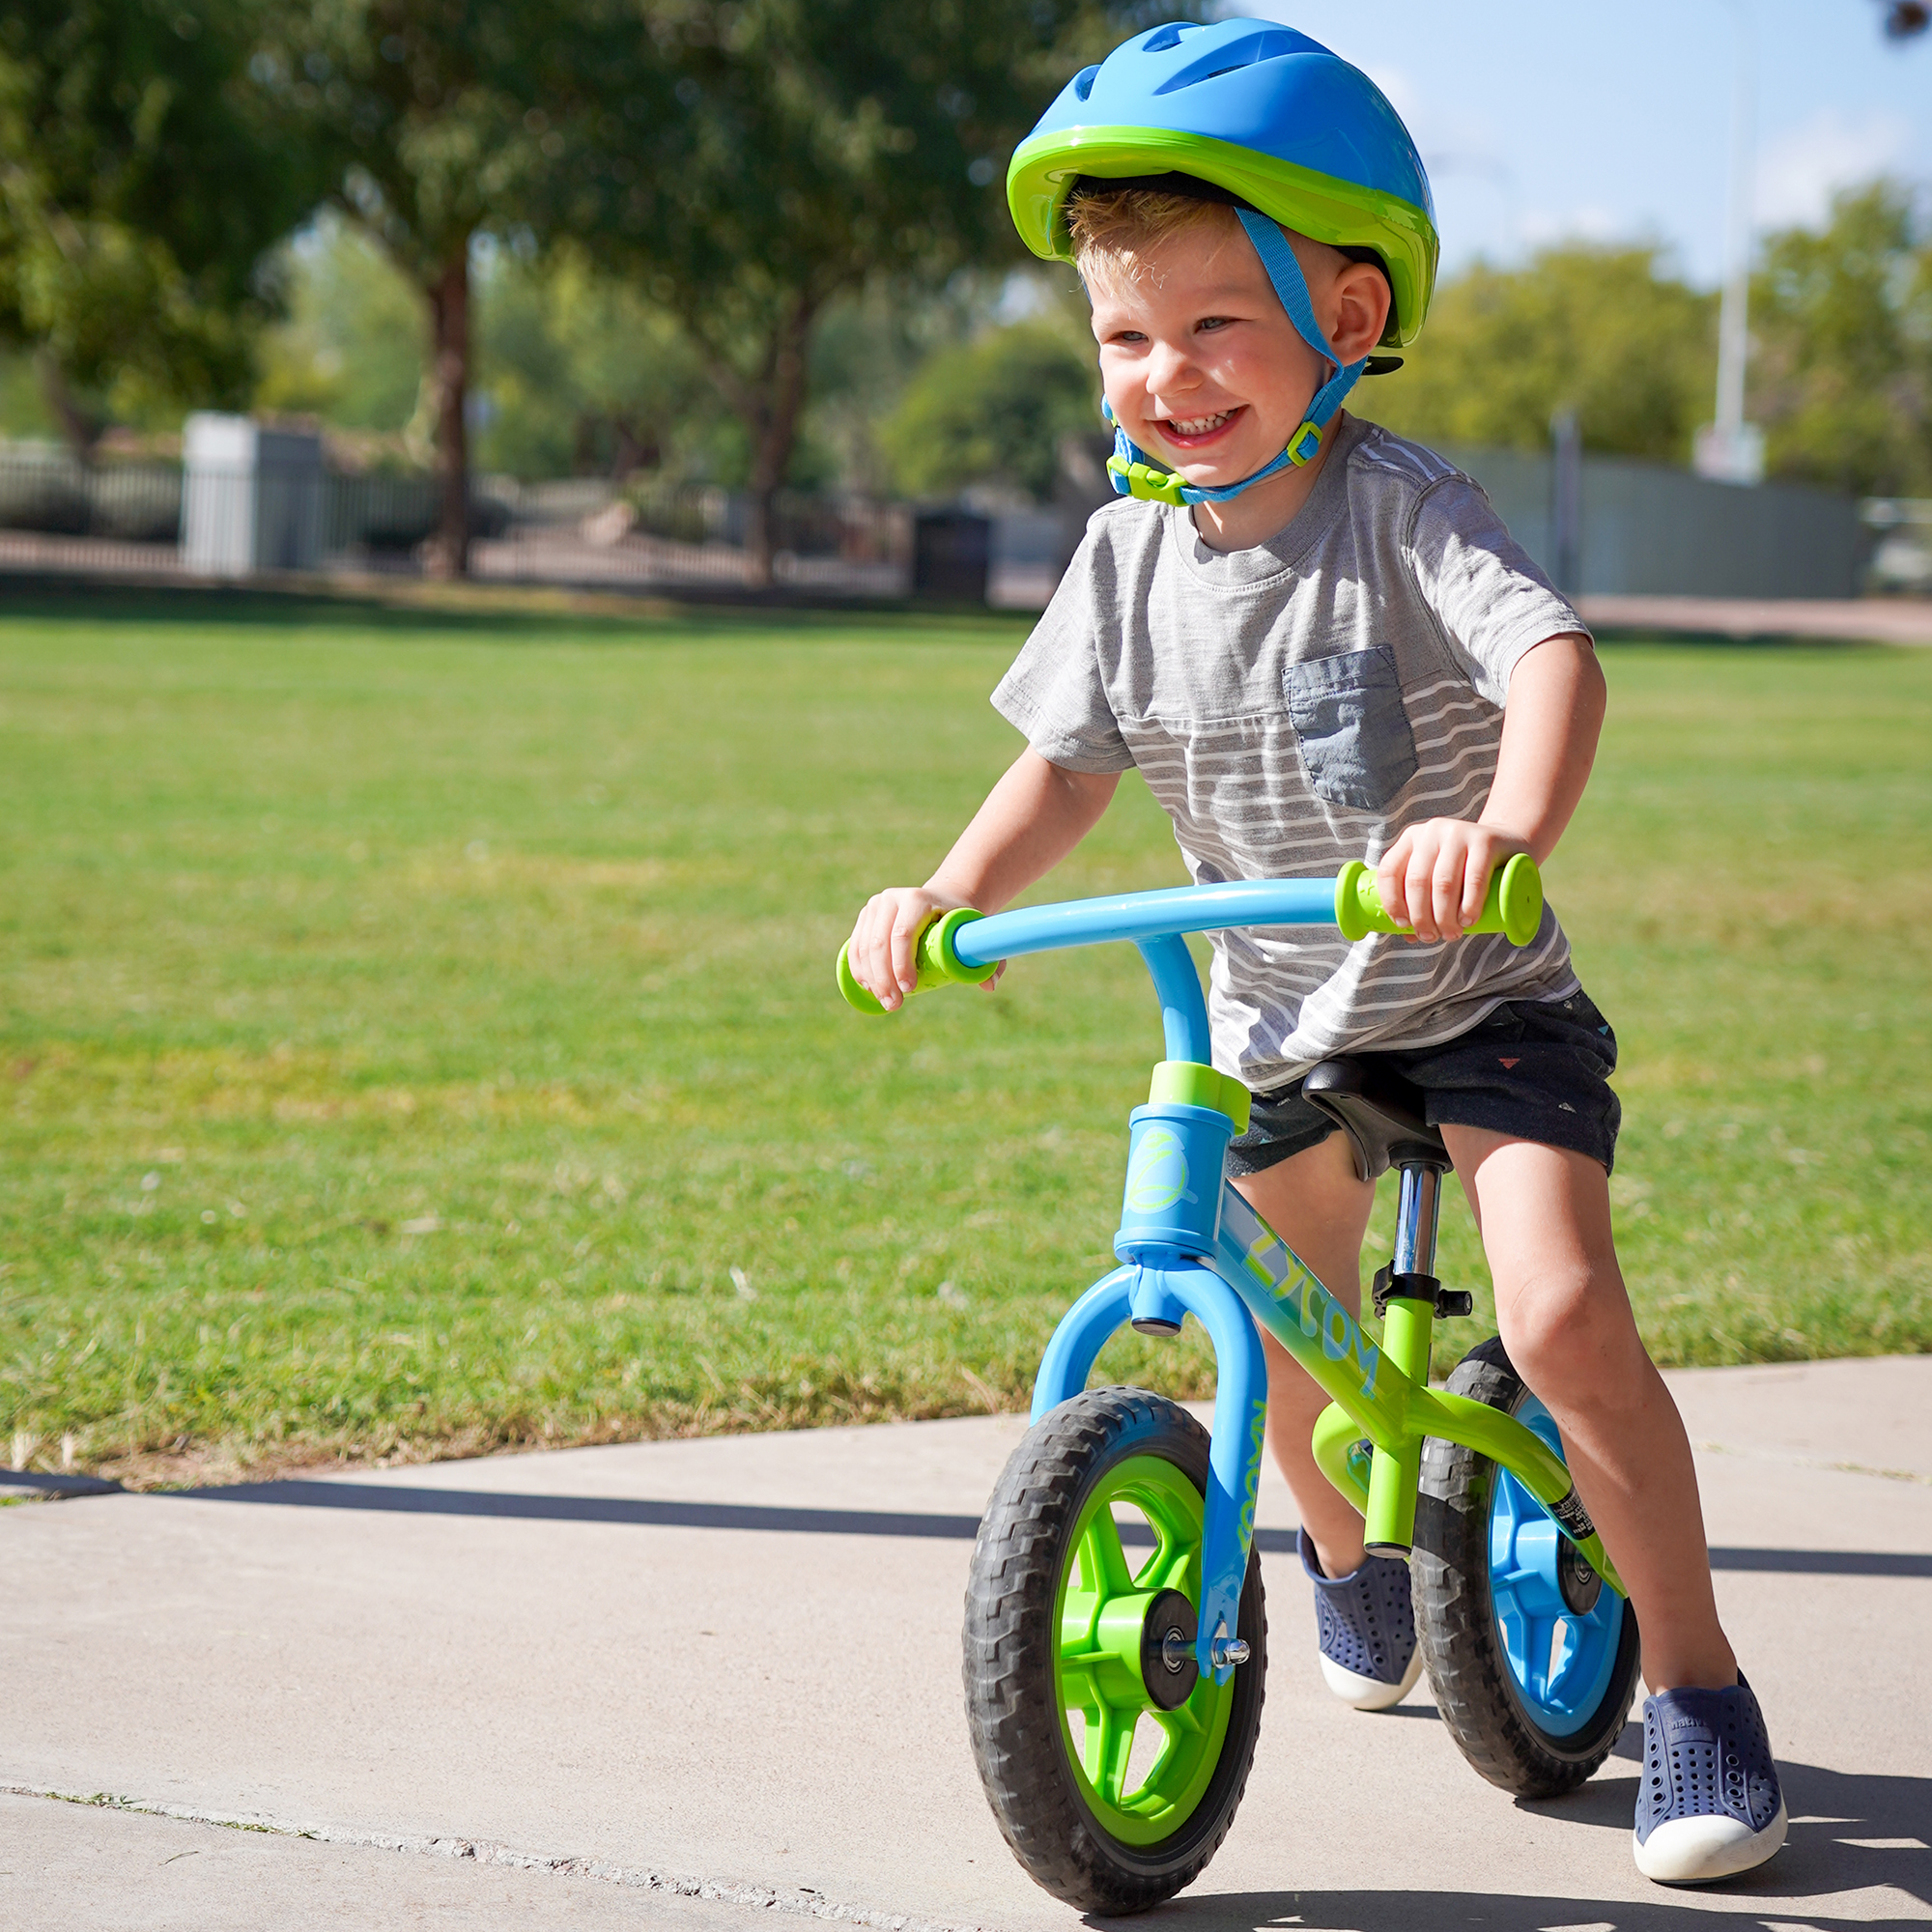 Zycom 10-inch Toddlers Balance Bike Adjustable Helmet Airless Wheels Lightweight Training Bike Blue - image 3 of 12